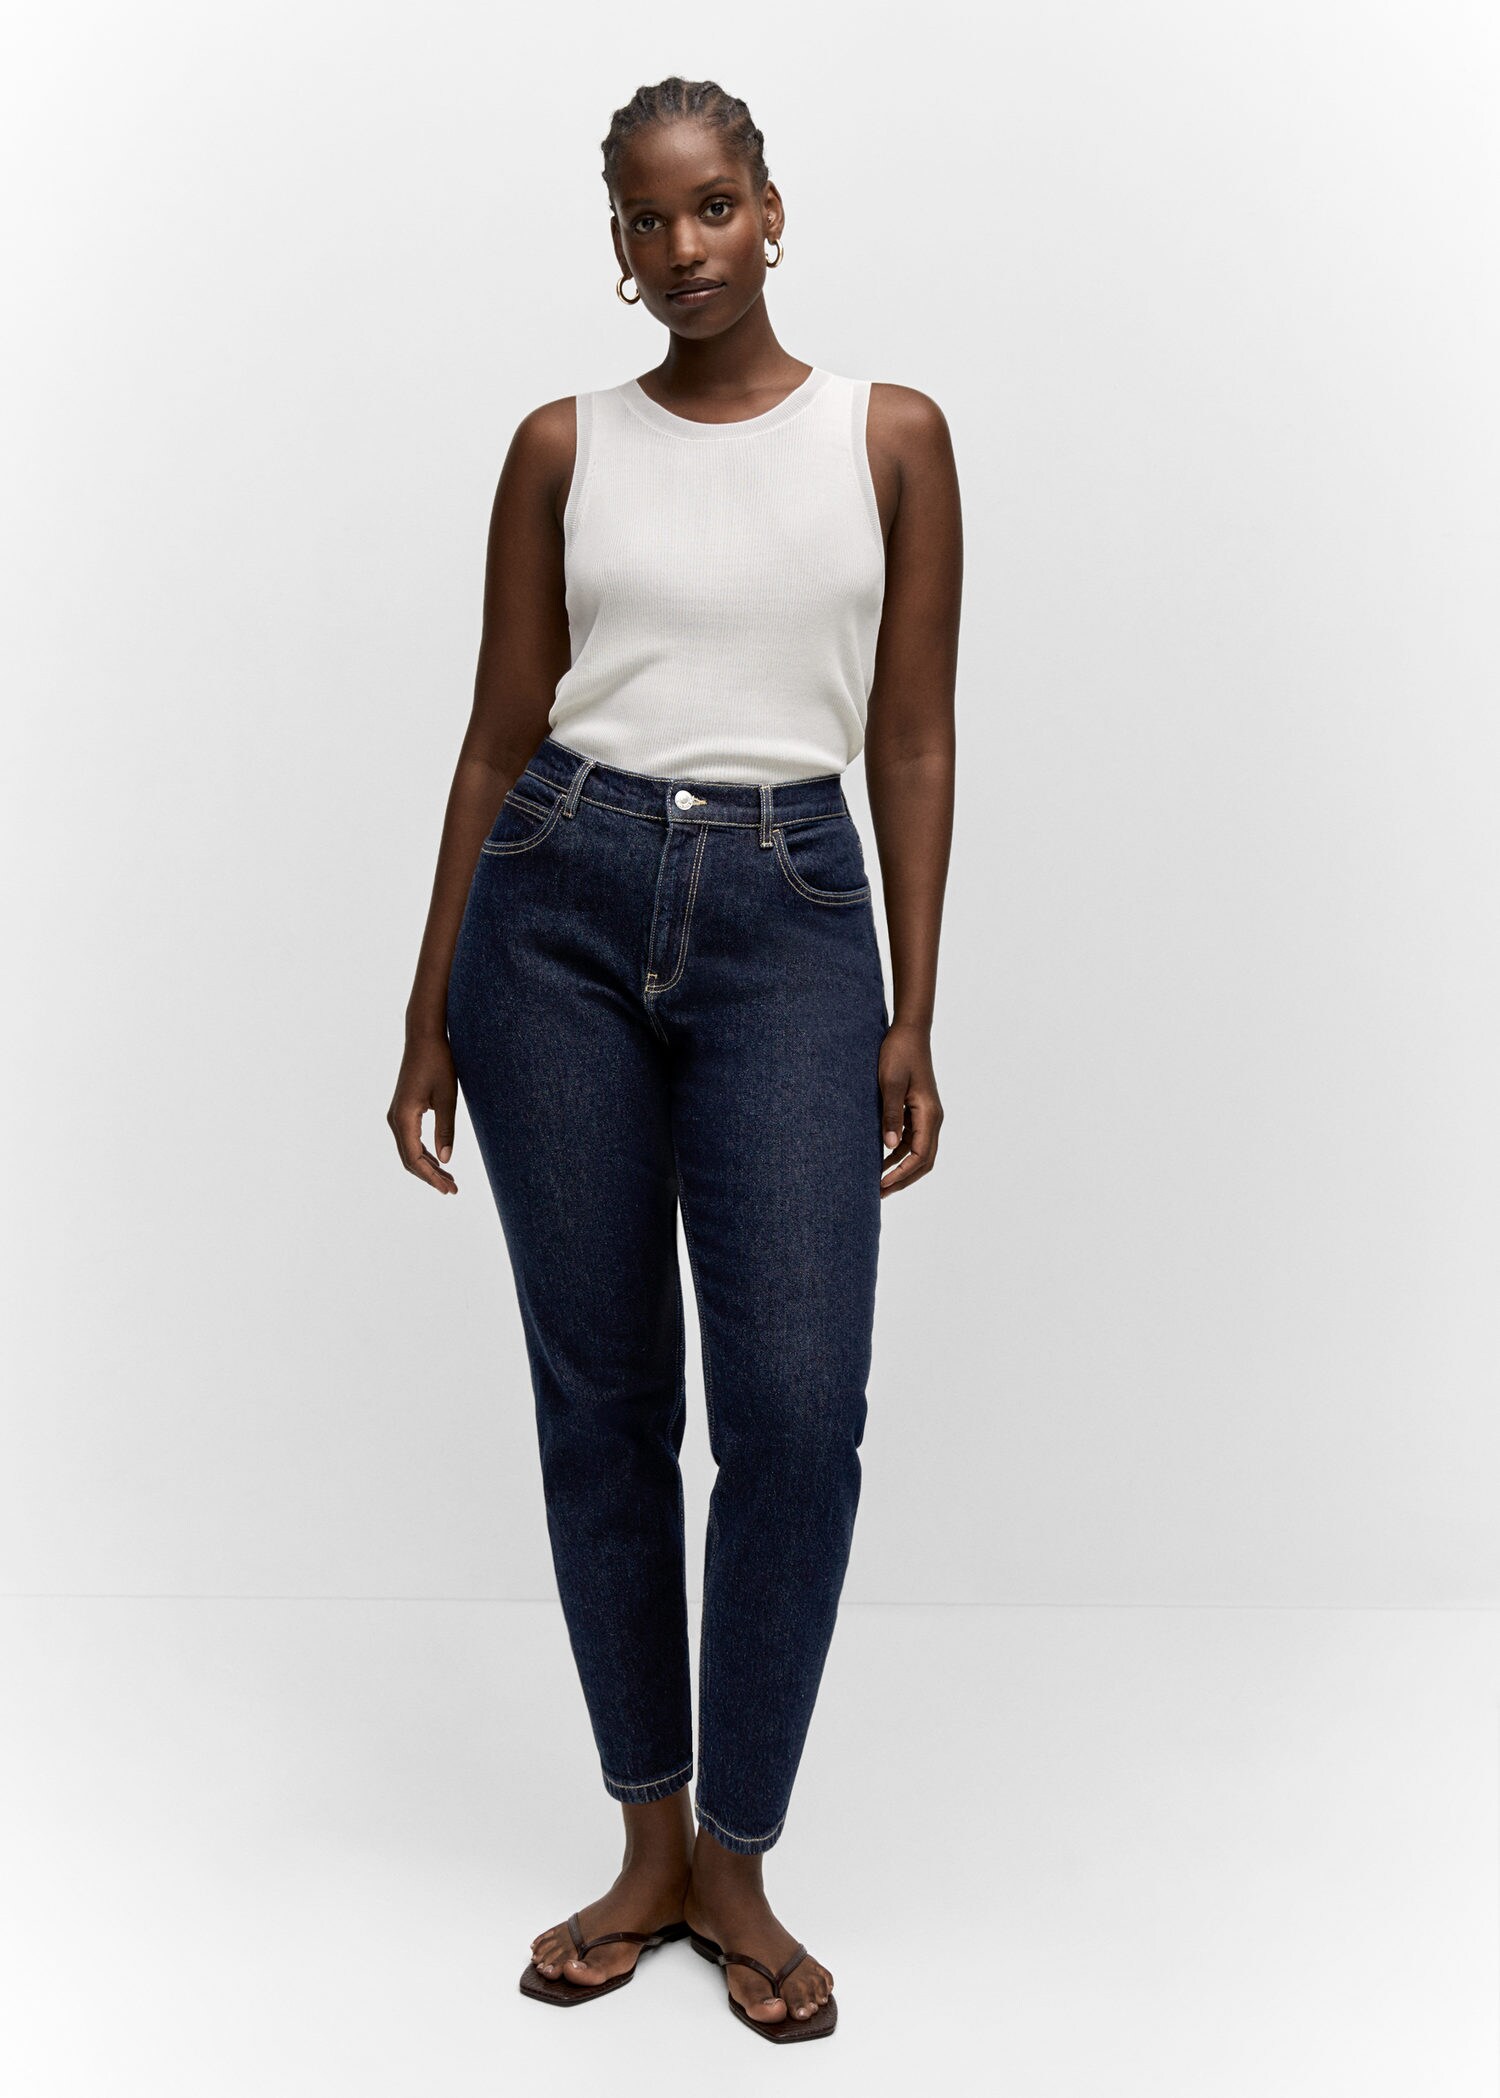 Buy Aahwan Solid Black Denim Baggy Bell Bottom Wide Leg Jeans Pants for  Women's & Girls' (226-Black-26) at Amazon.in